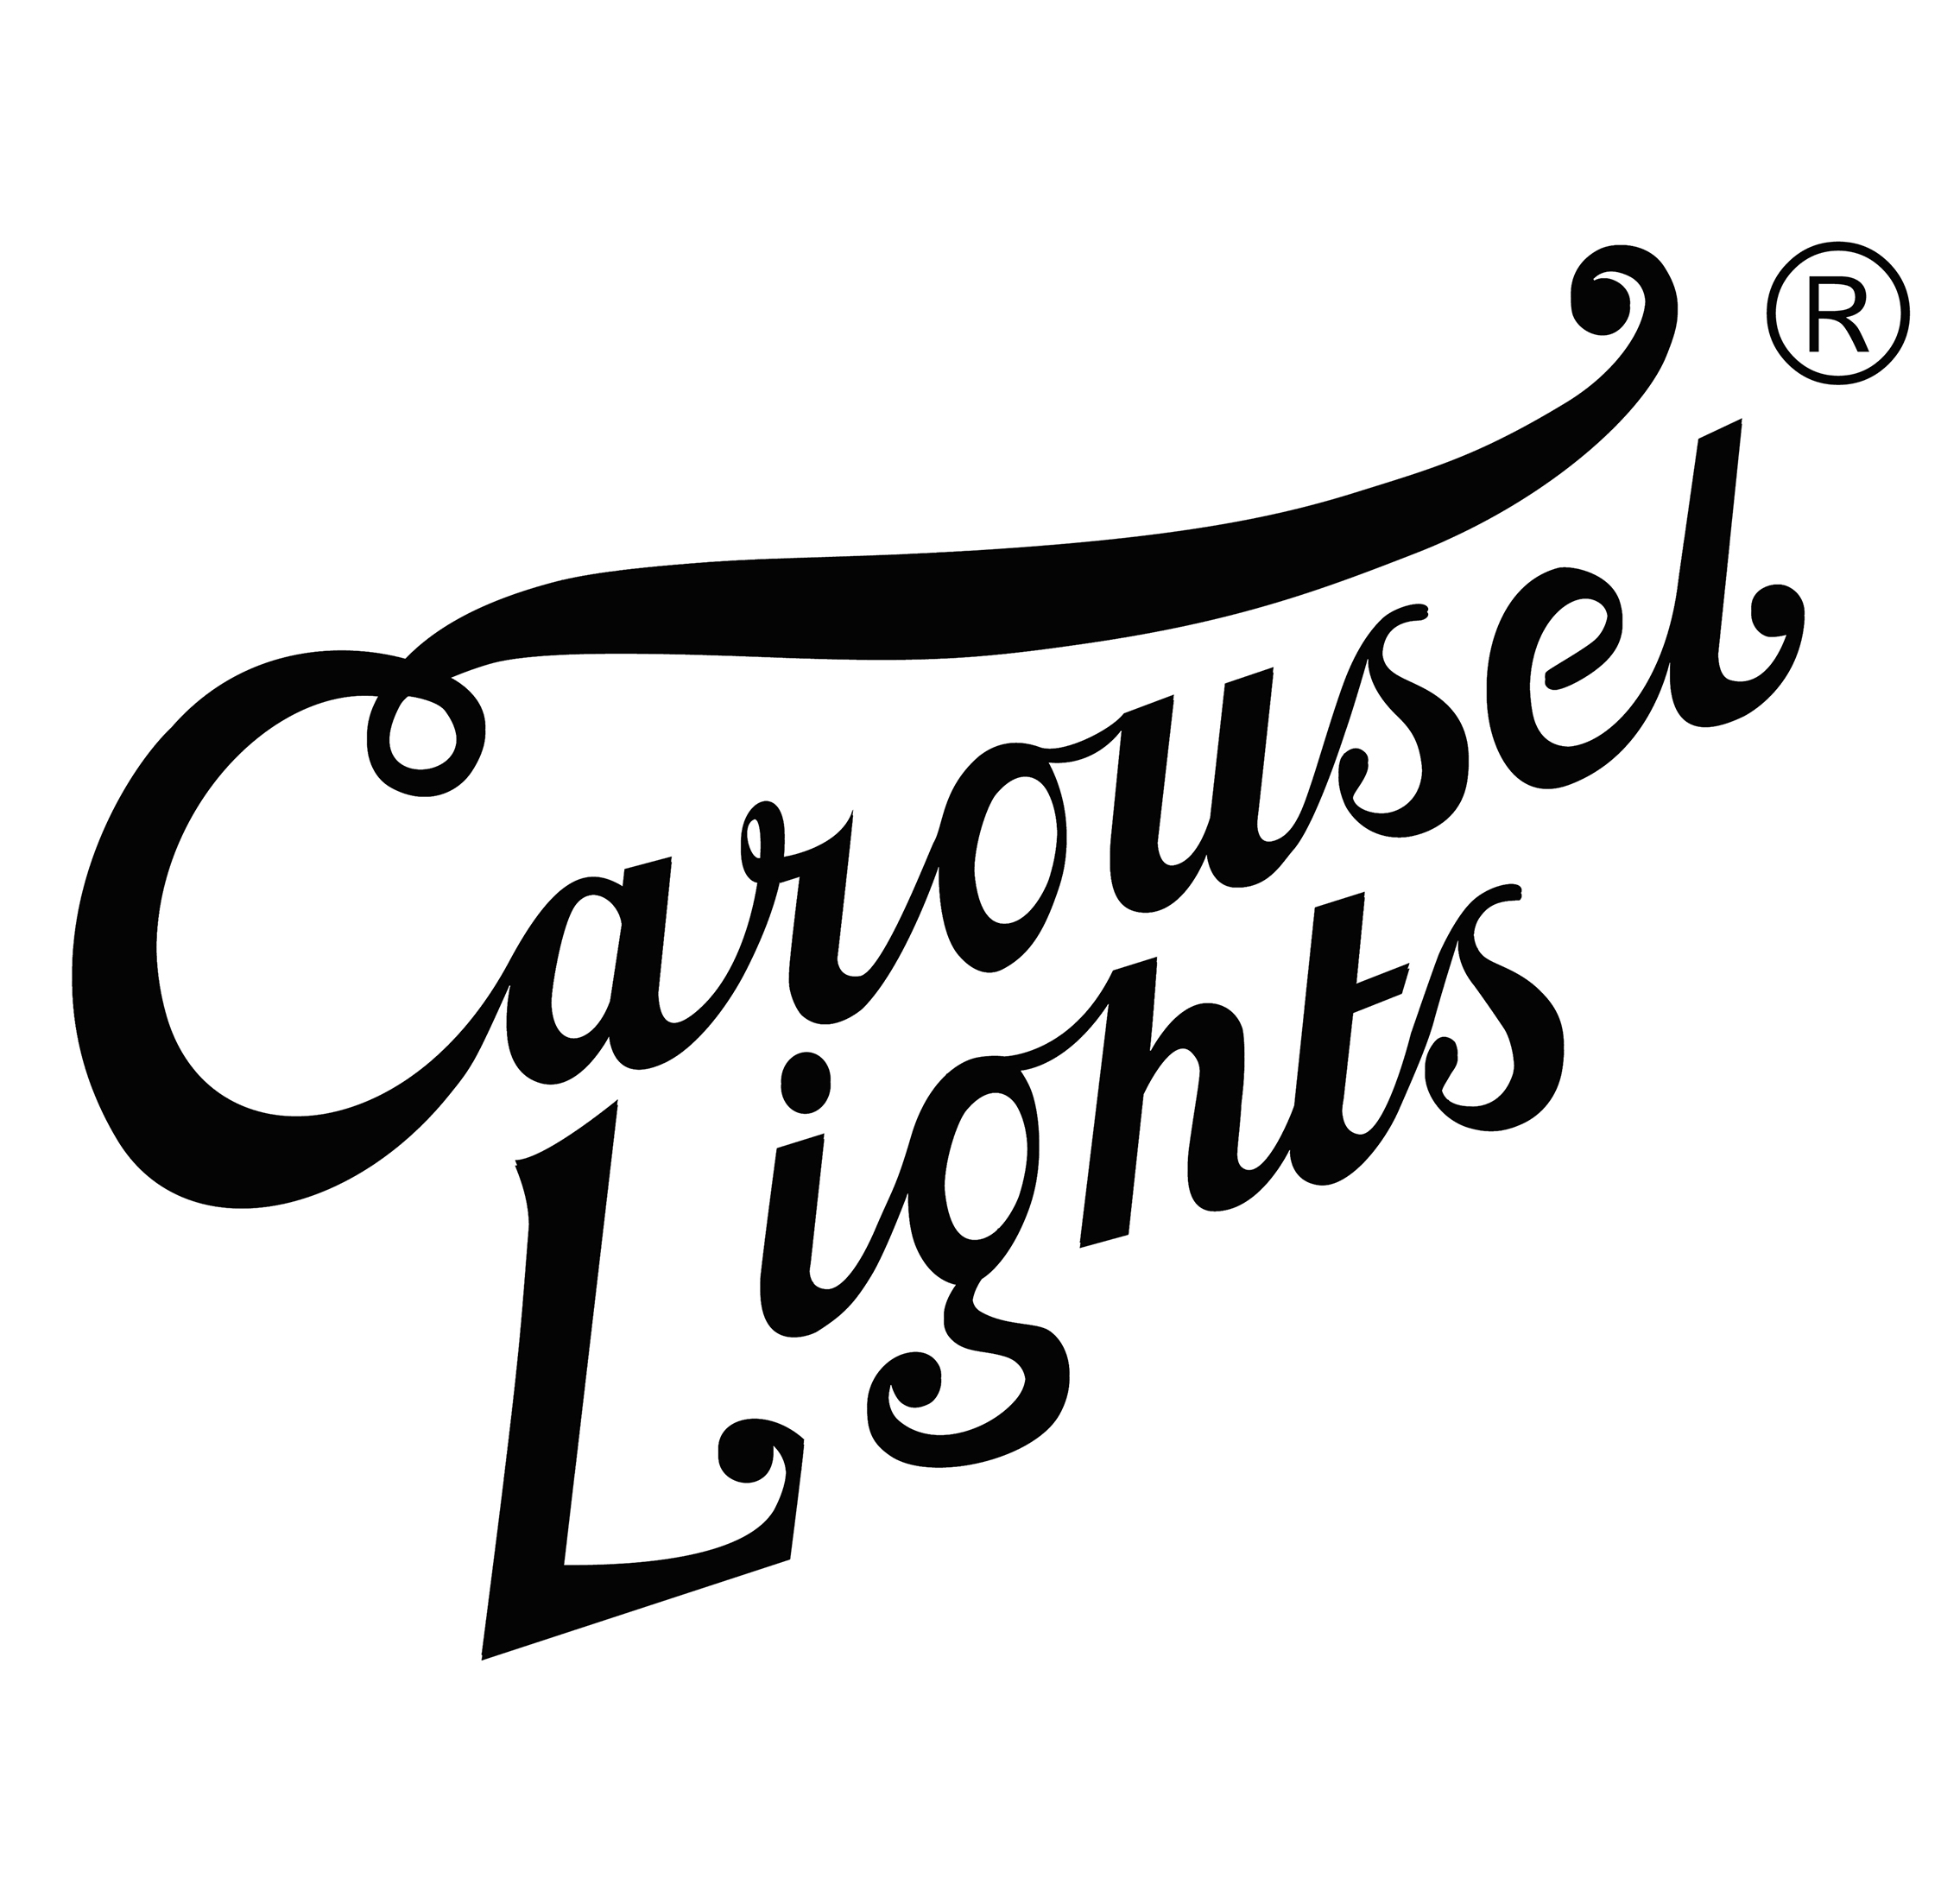 Carousel Lights